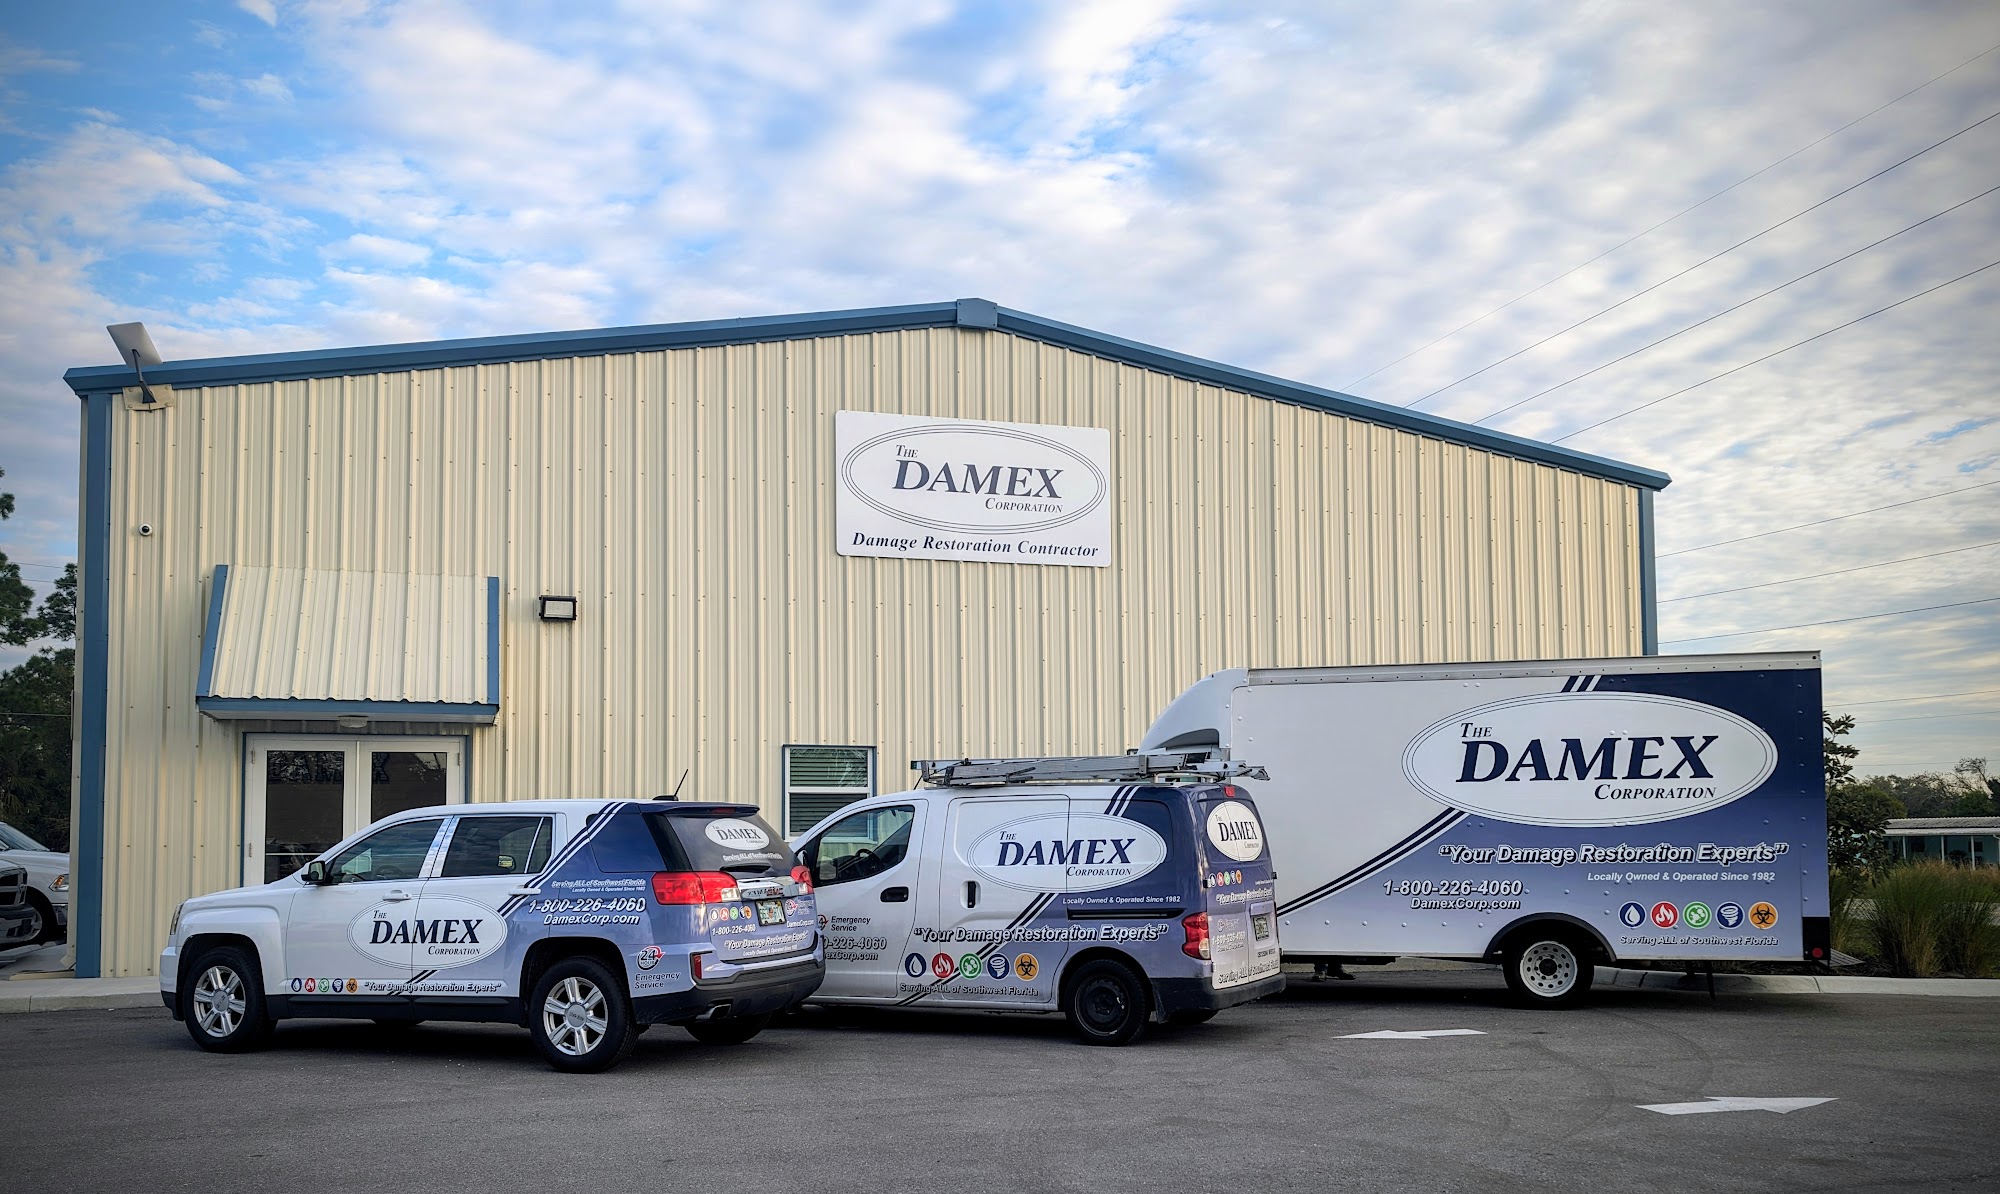 The Damex Corporation